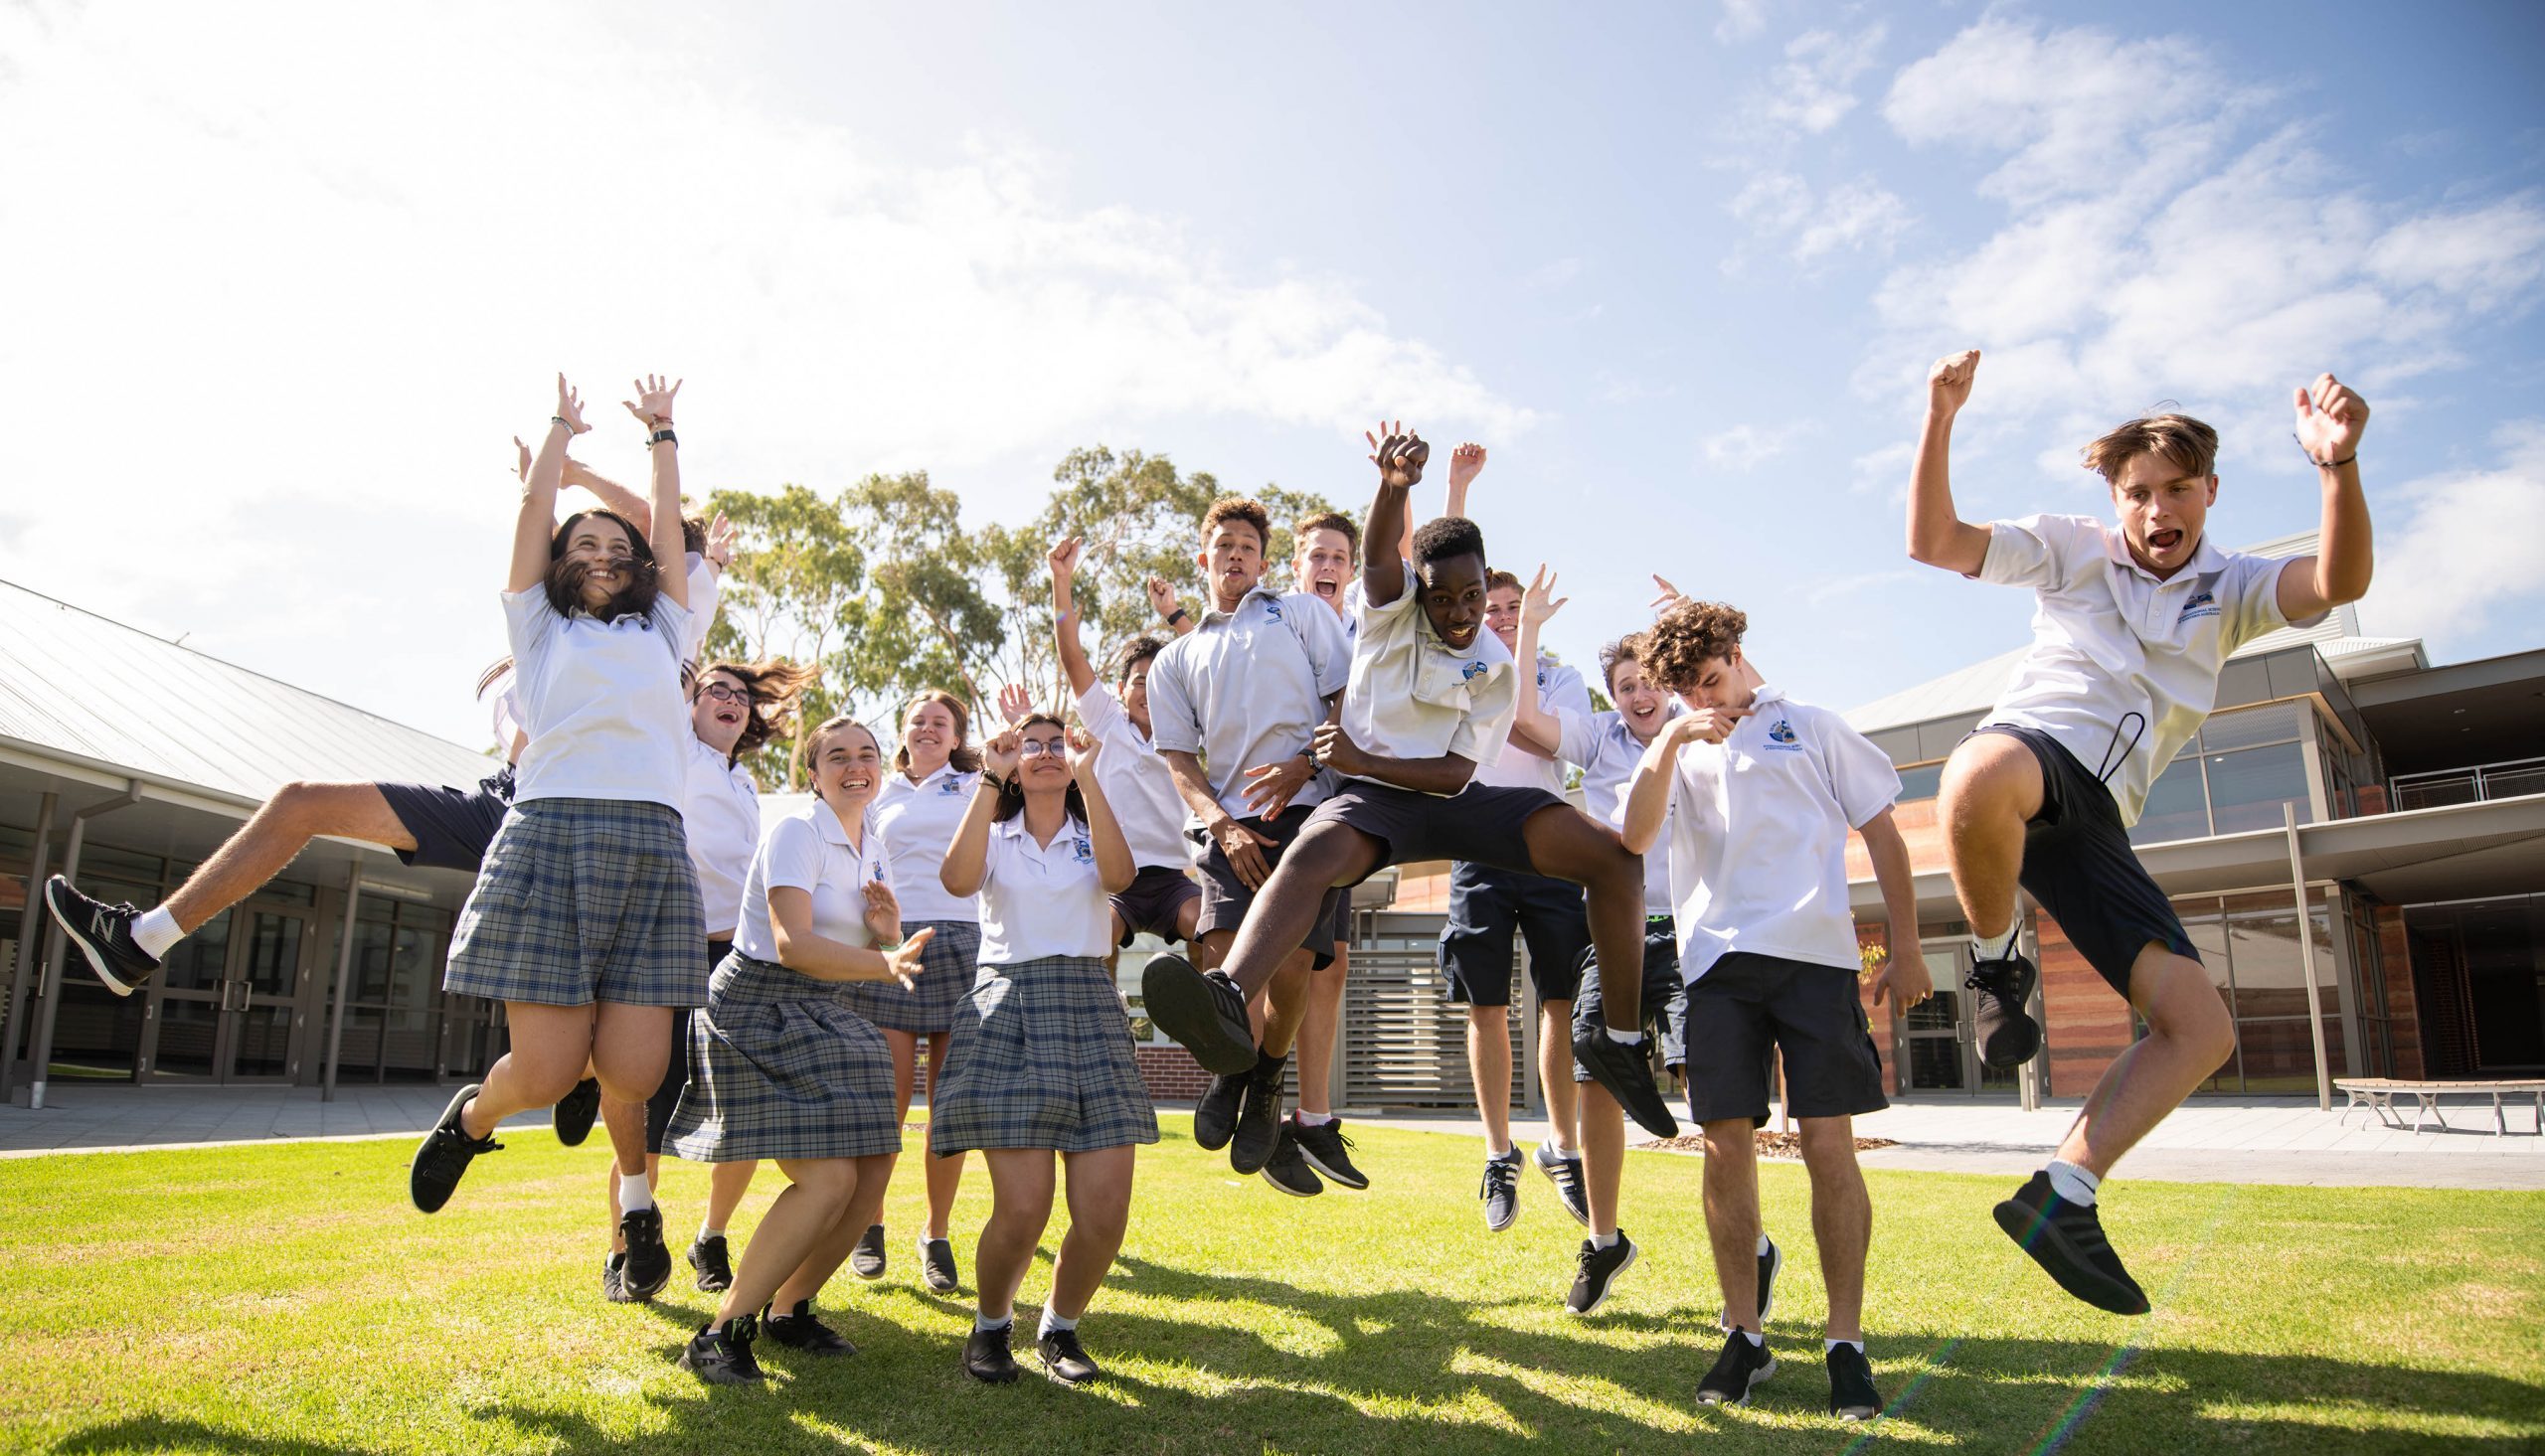 Student Leadership - The International School of Western Australia